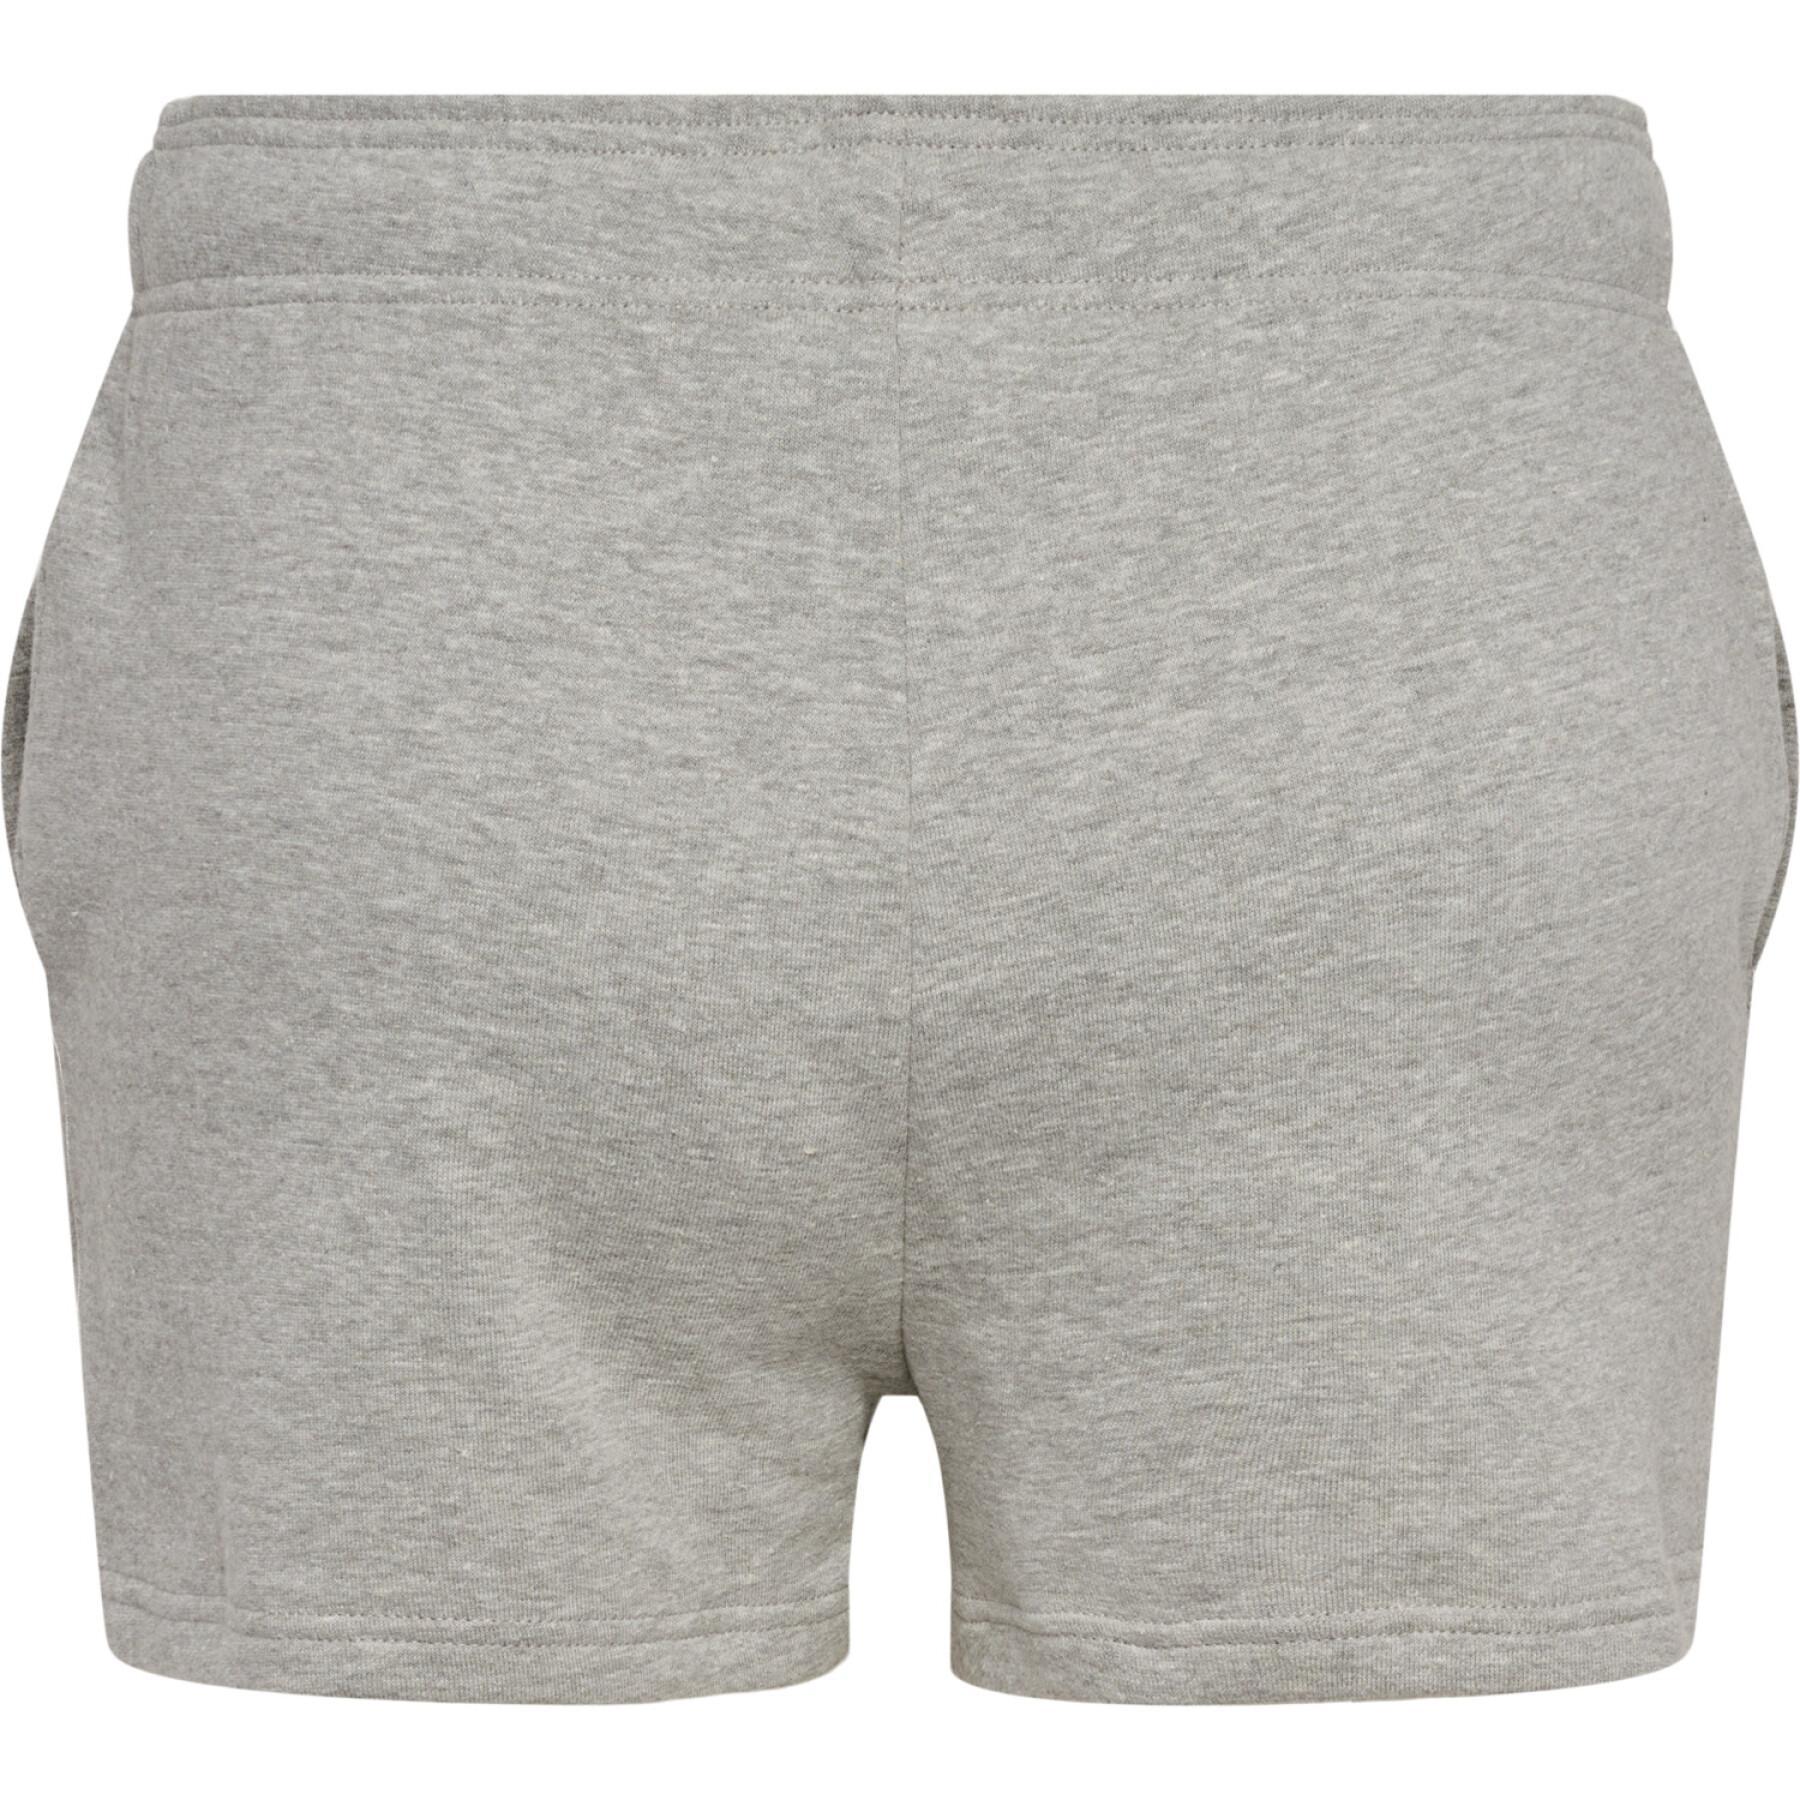 Shorts - Hummel - Lifestyle and Legacy Skirts shorts Woman - Women\'s